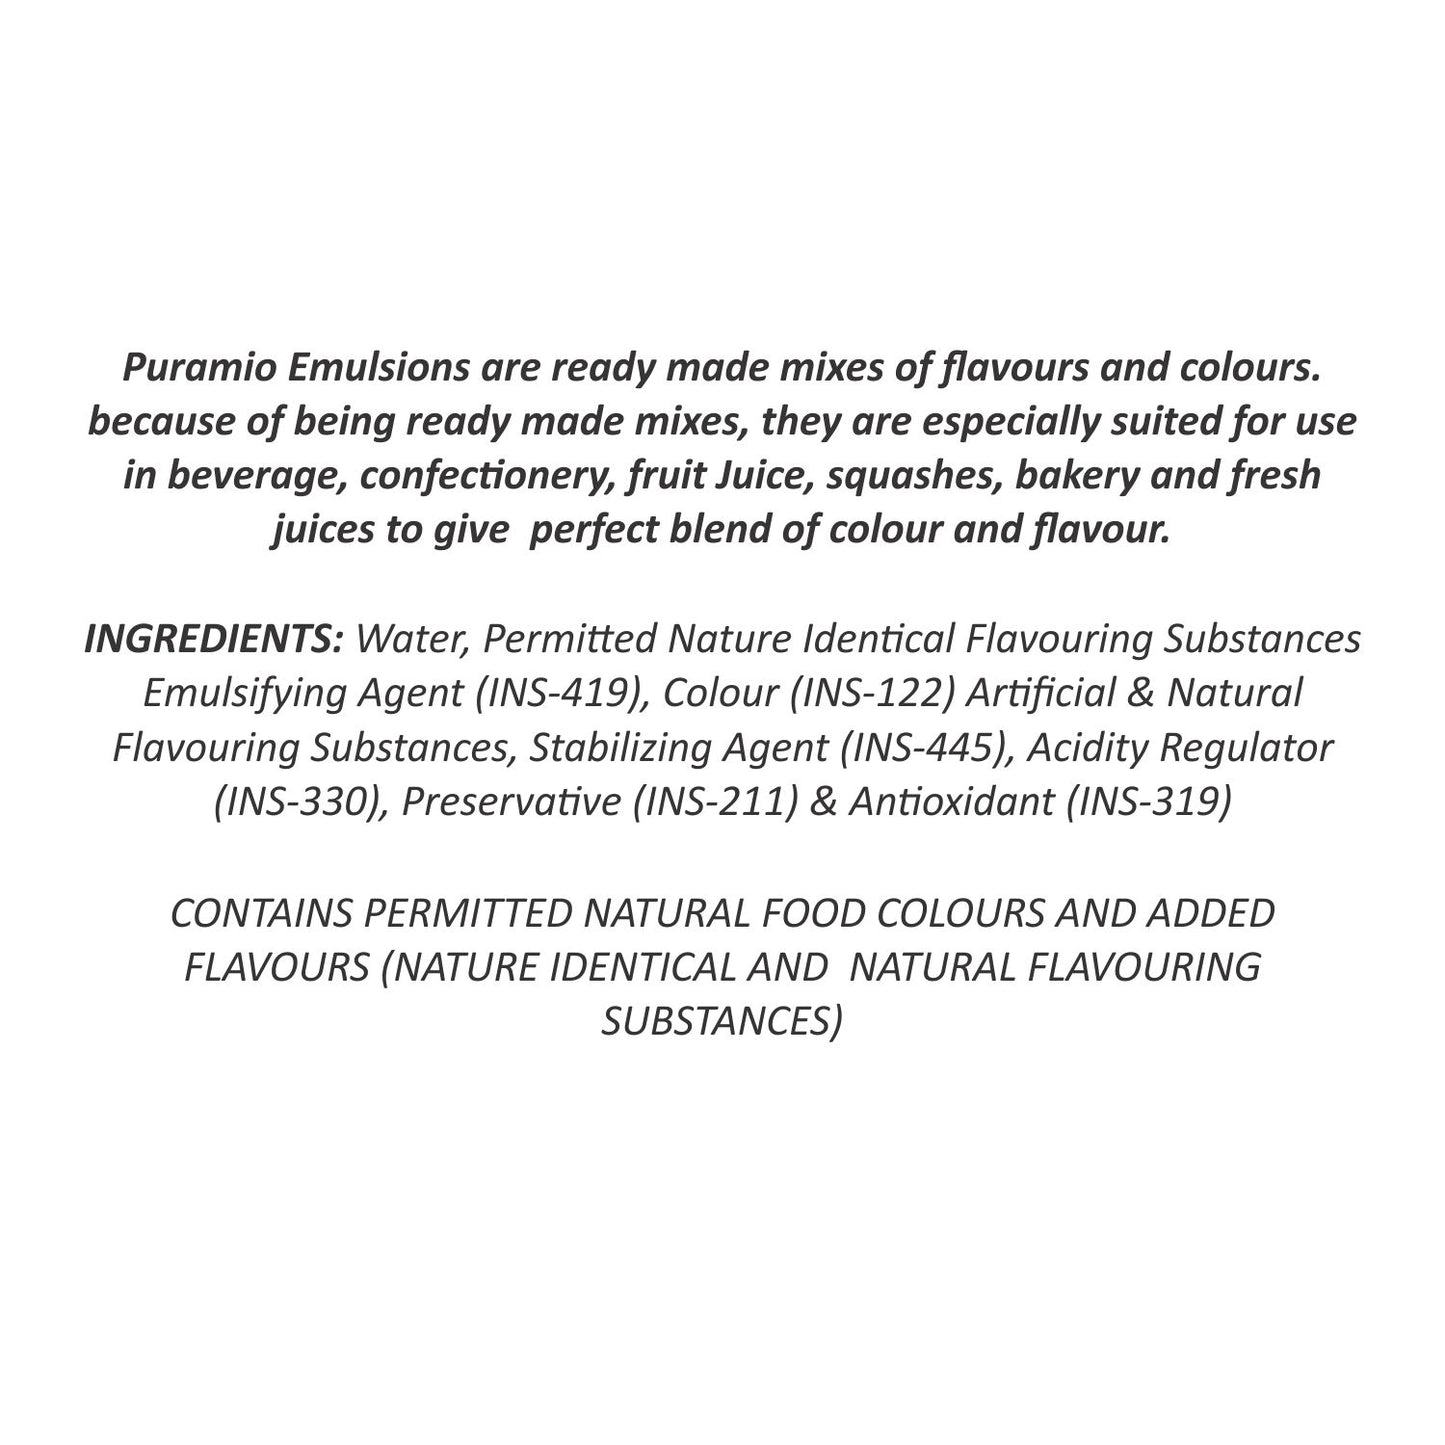 Puramio Strawberry- Flavour with Colour (Emulsion)